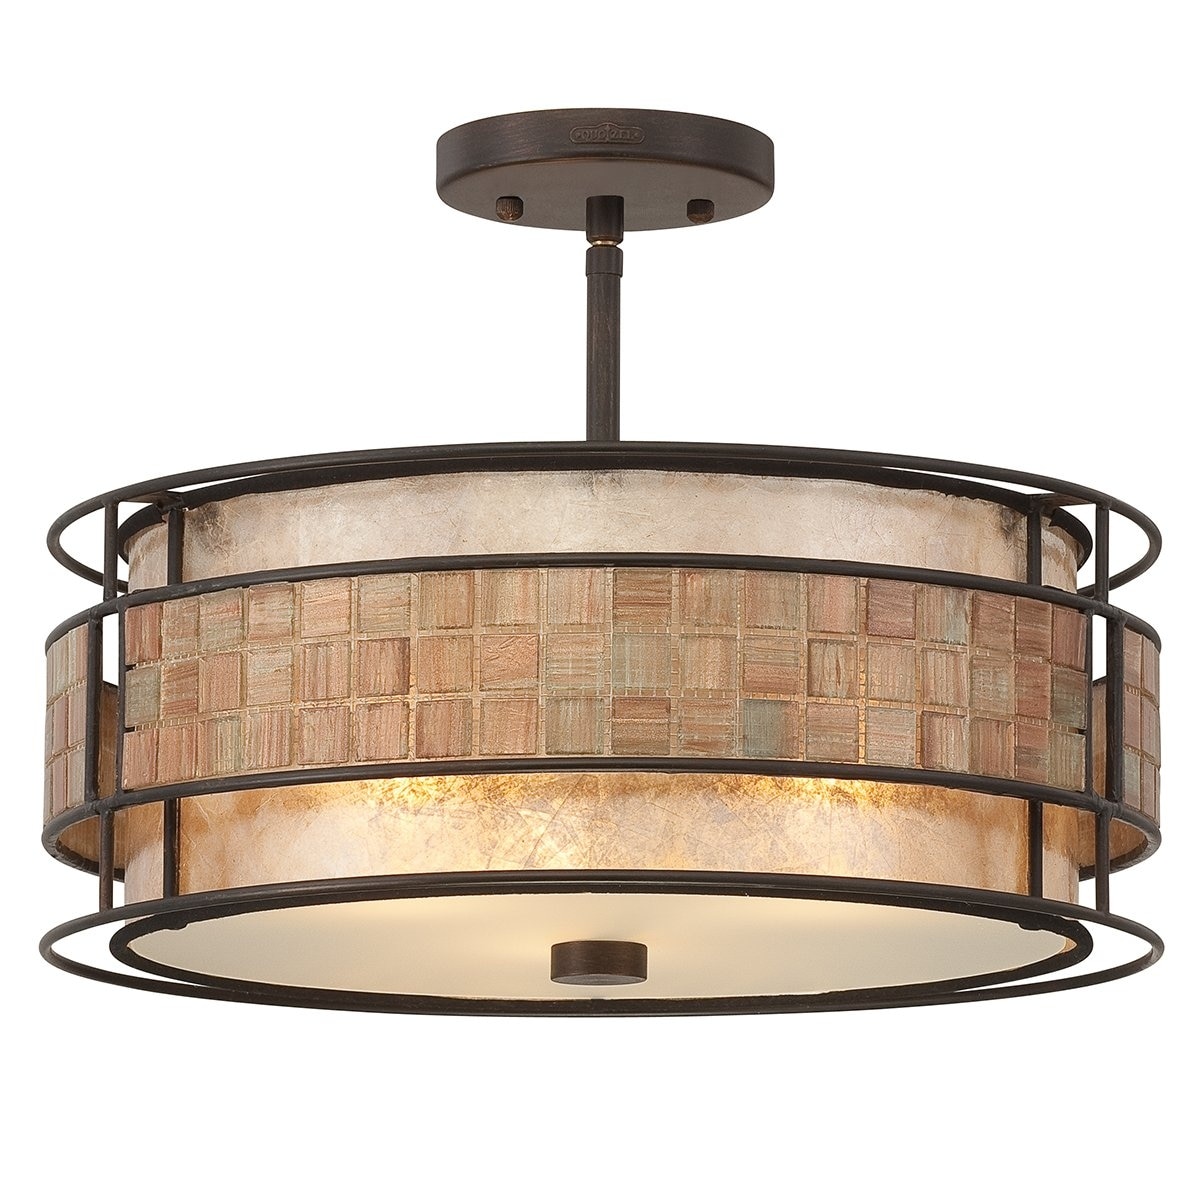 Luxury Art Deco Semi Flush Ceiling Light 12 H X 16 W With Moroccan Style Copper Revival Finish